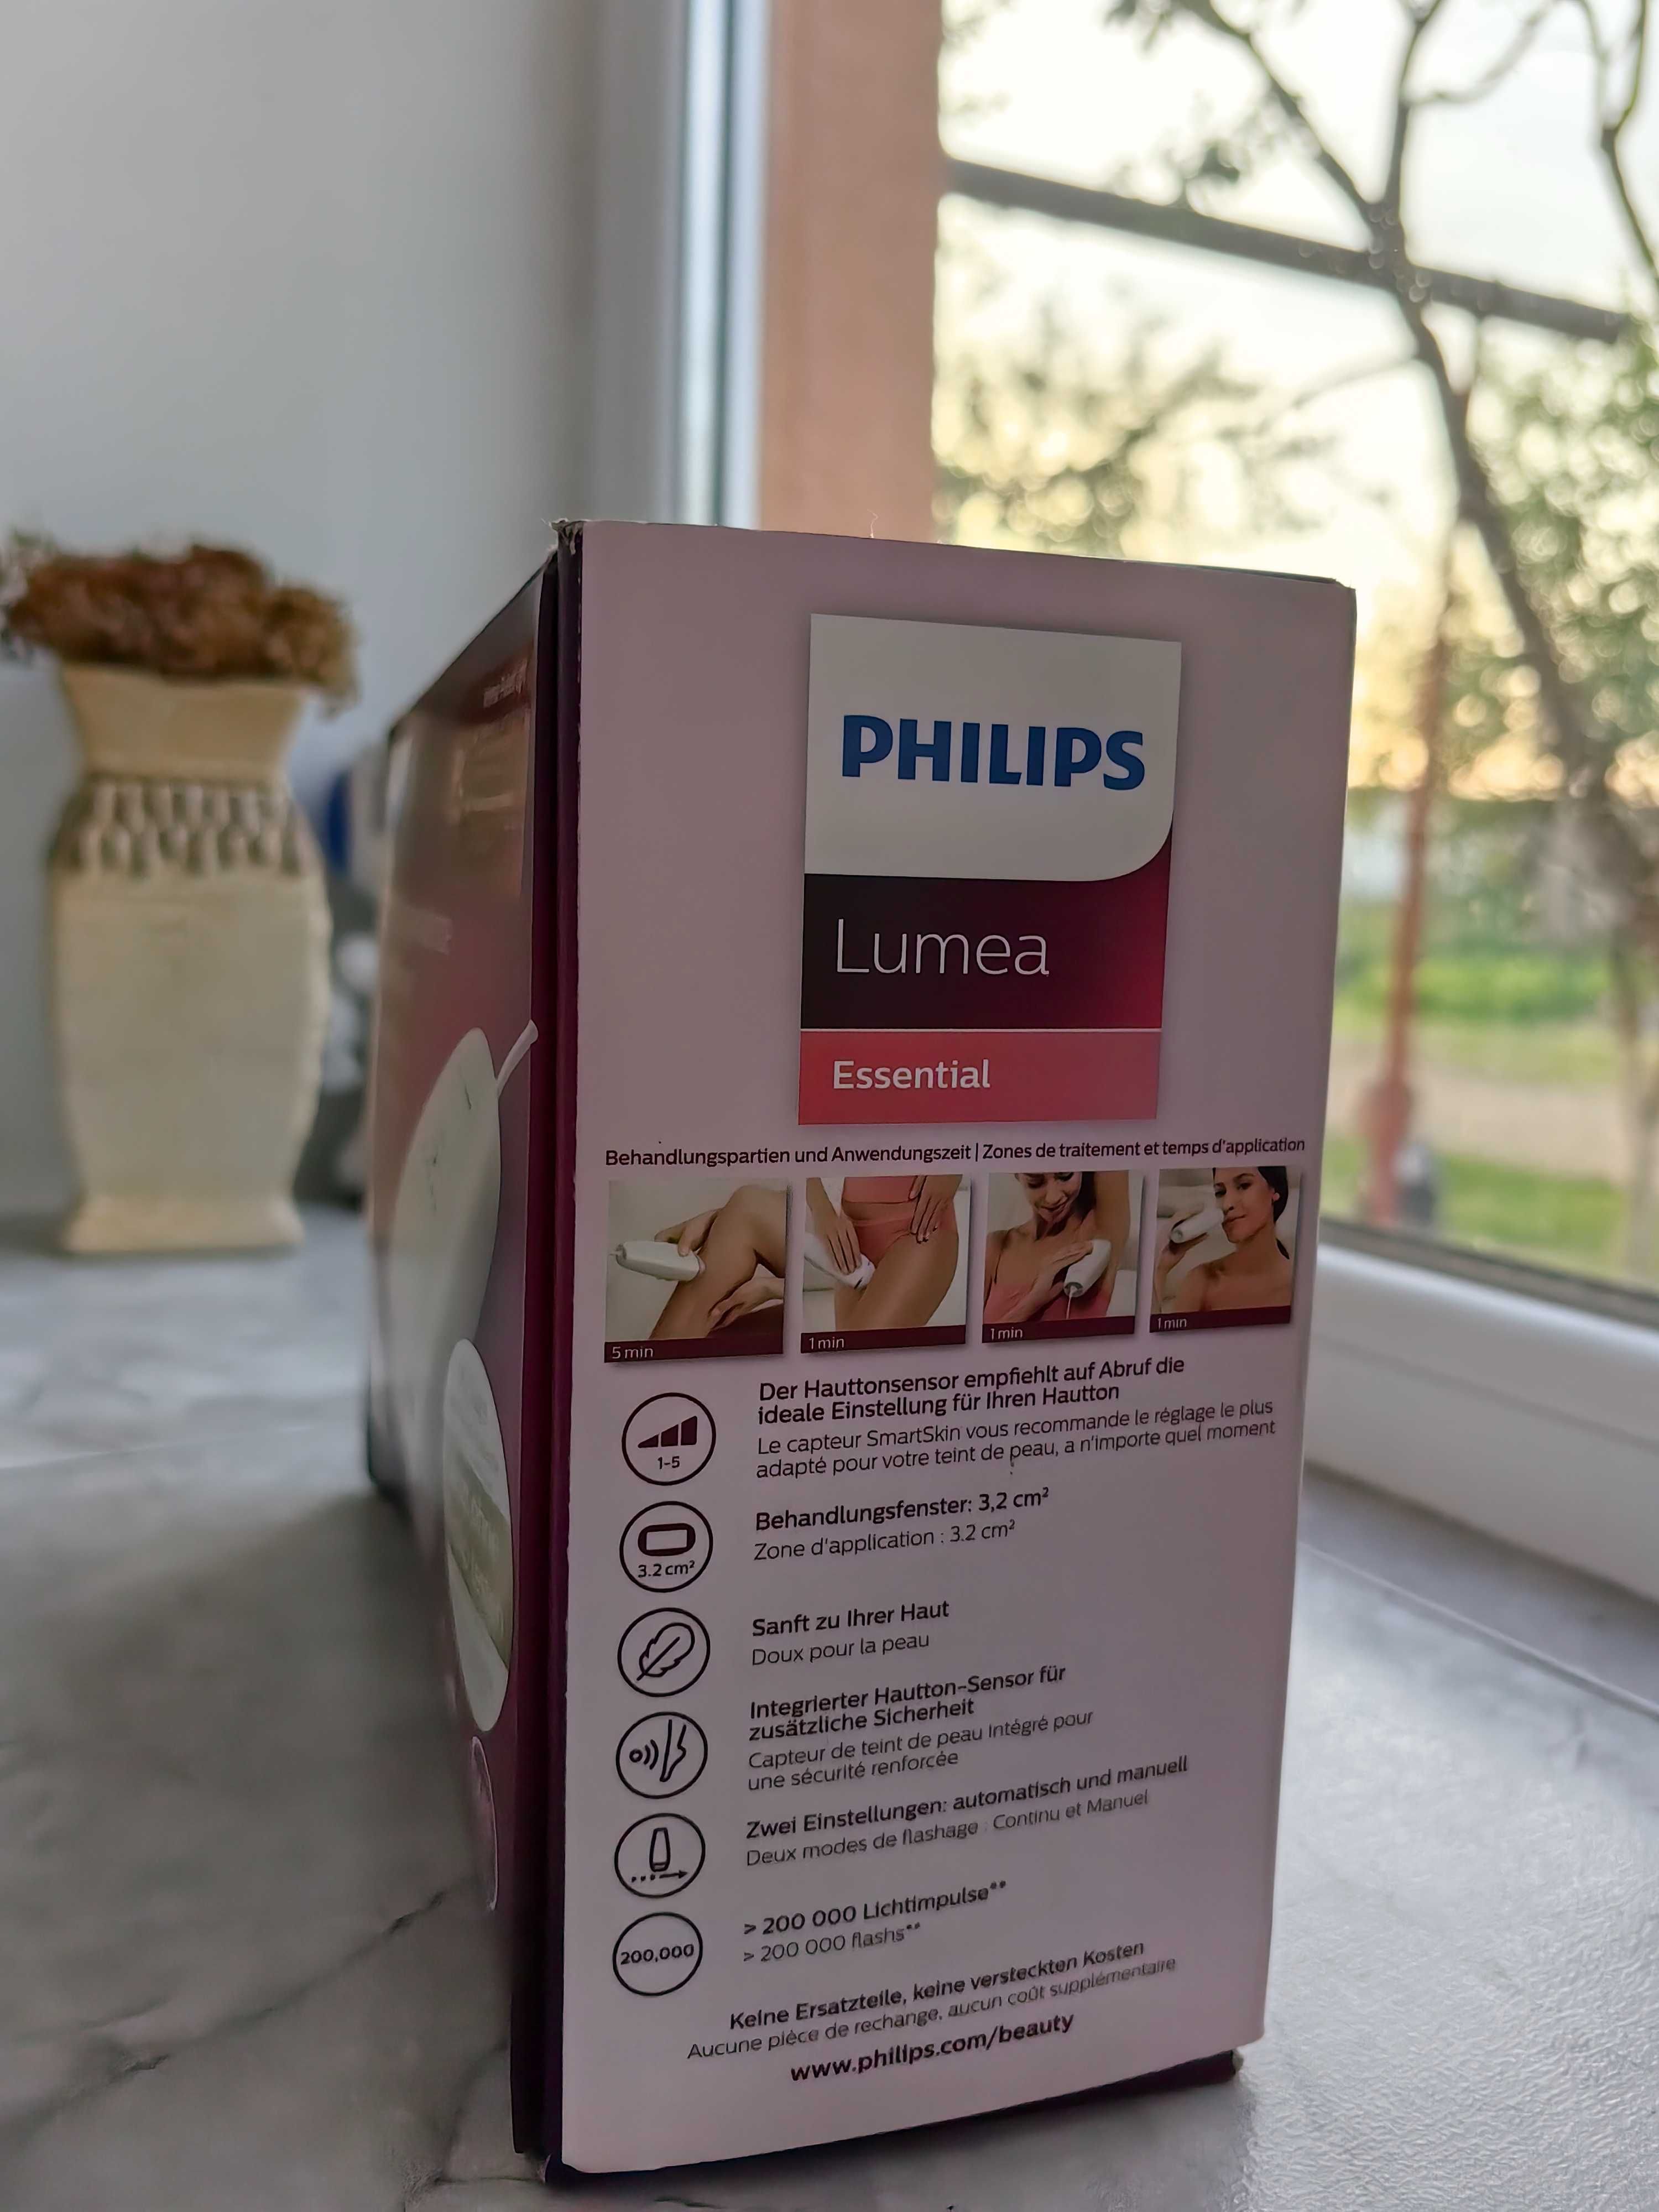 Philips lumea bri863 epilator ipl